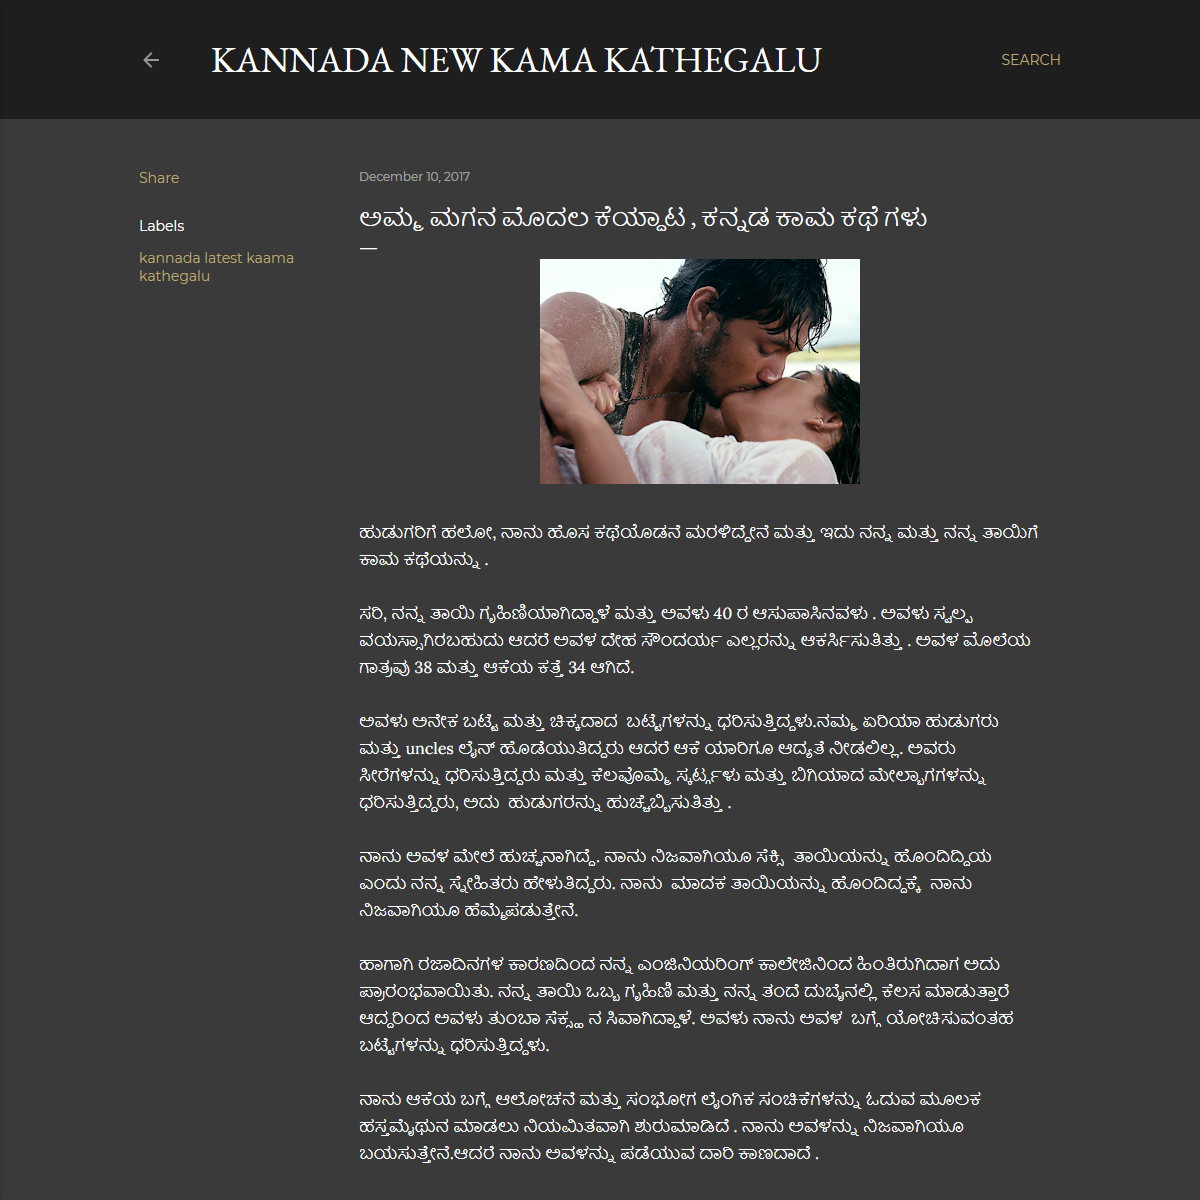 A complete backup of https://kamakathegaluinkannada.blogspot.com/2017/12/blog-post.html